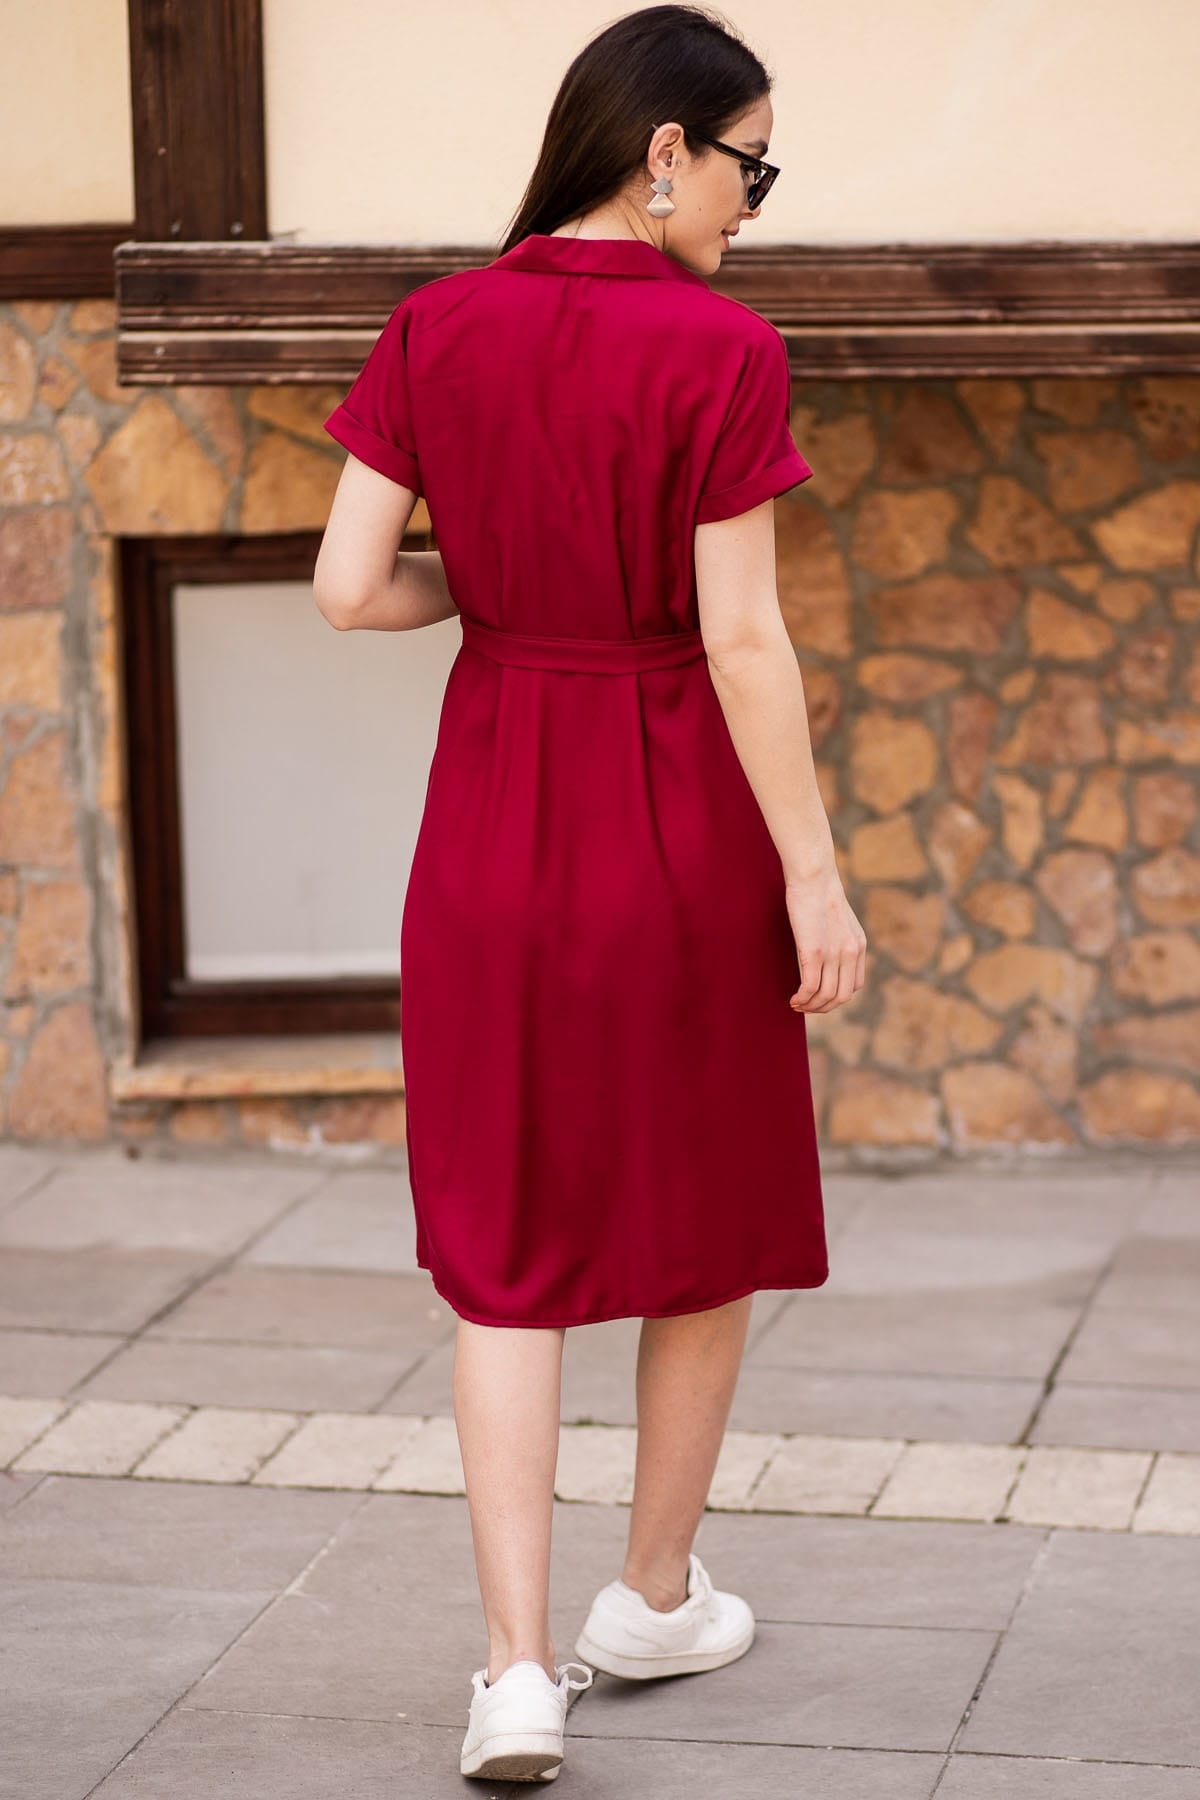 Female Bordeaux Waist Belt Short Sleeve Shirt Dress Arm-19y001068